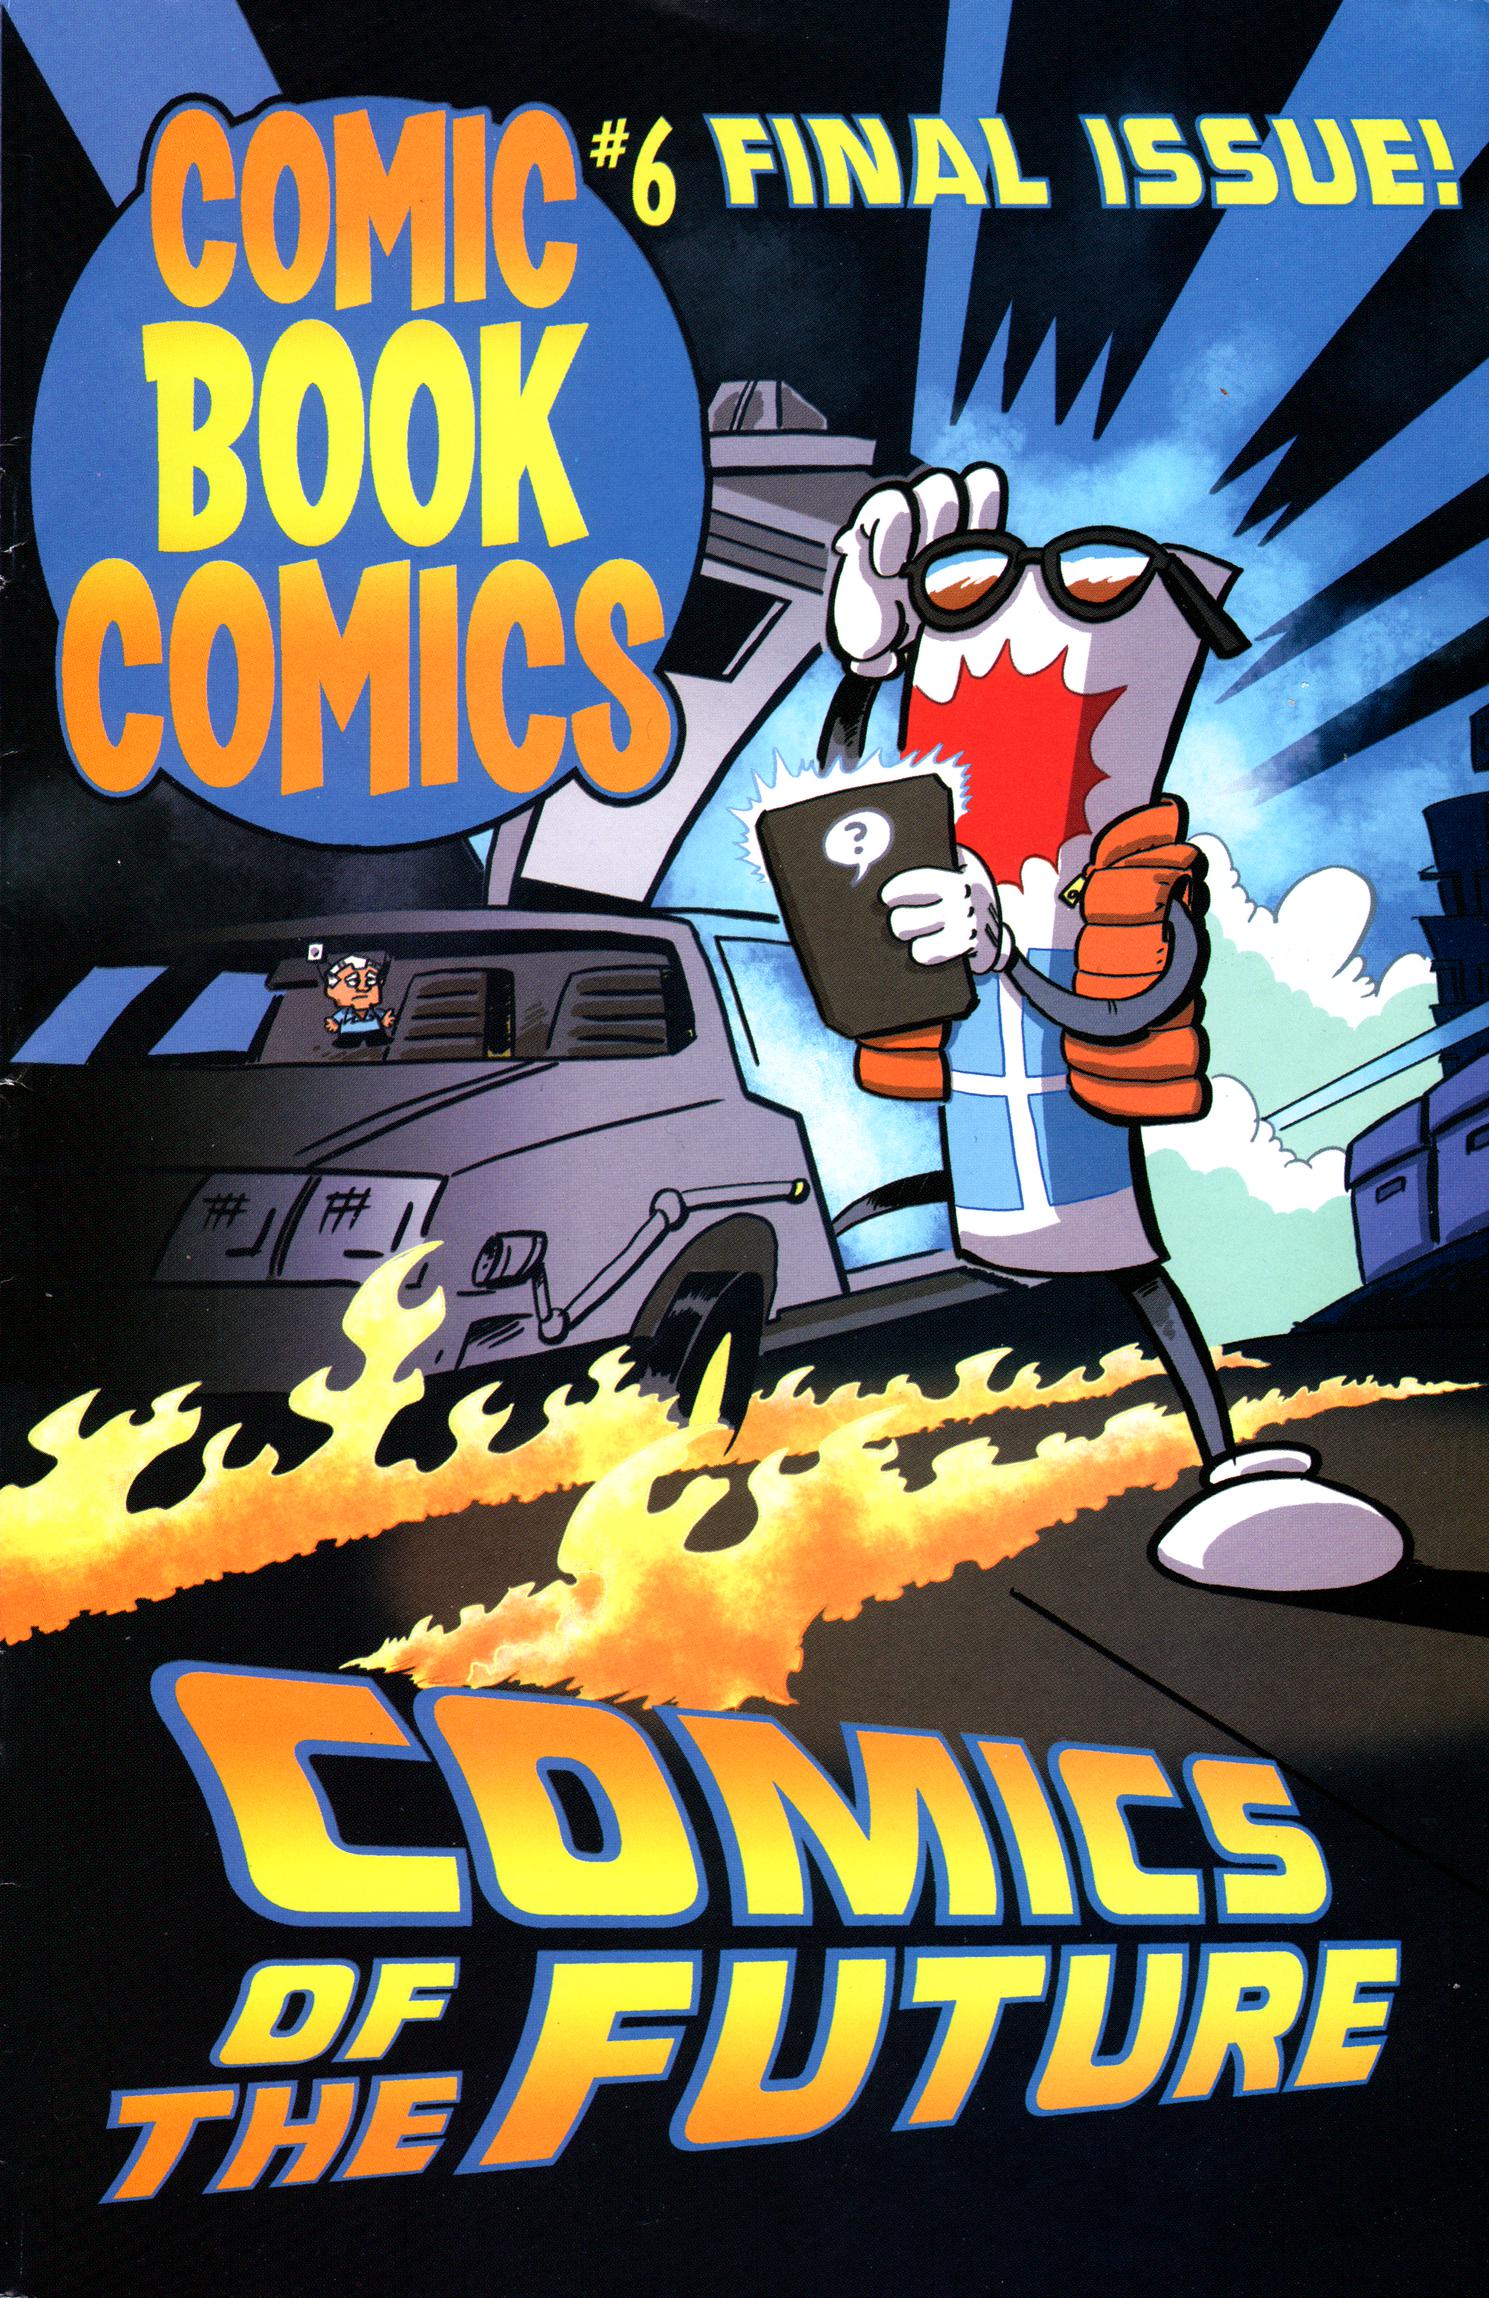 Read online Comic Book Comics comic -  Issue #6 - 1